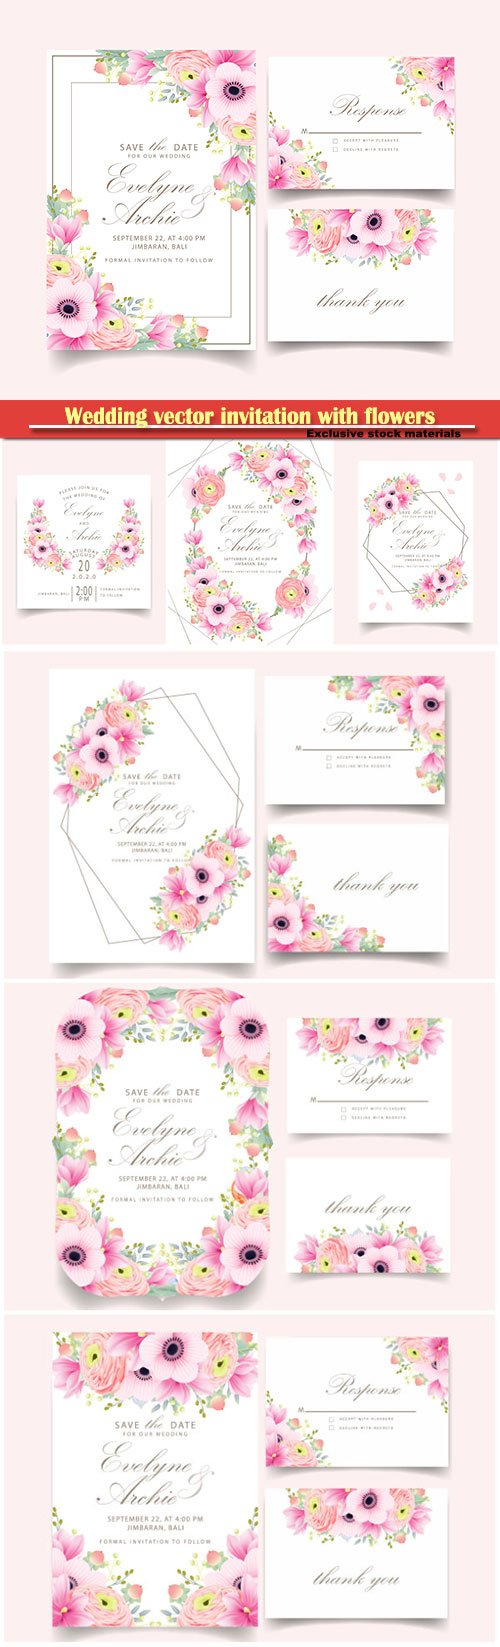 Wedding vector invitation with beautiful flowers